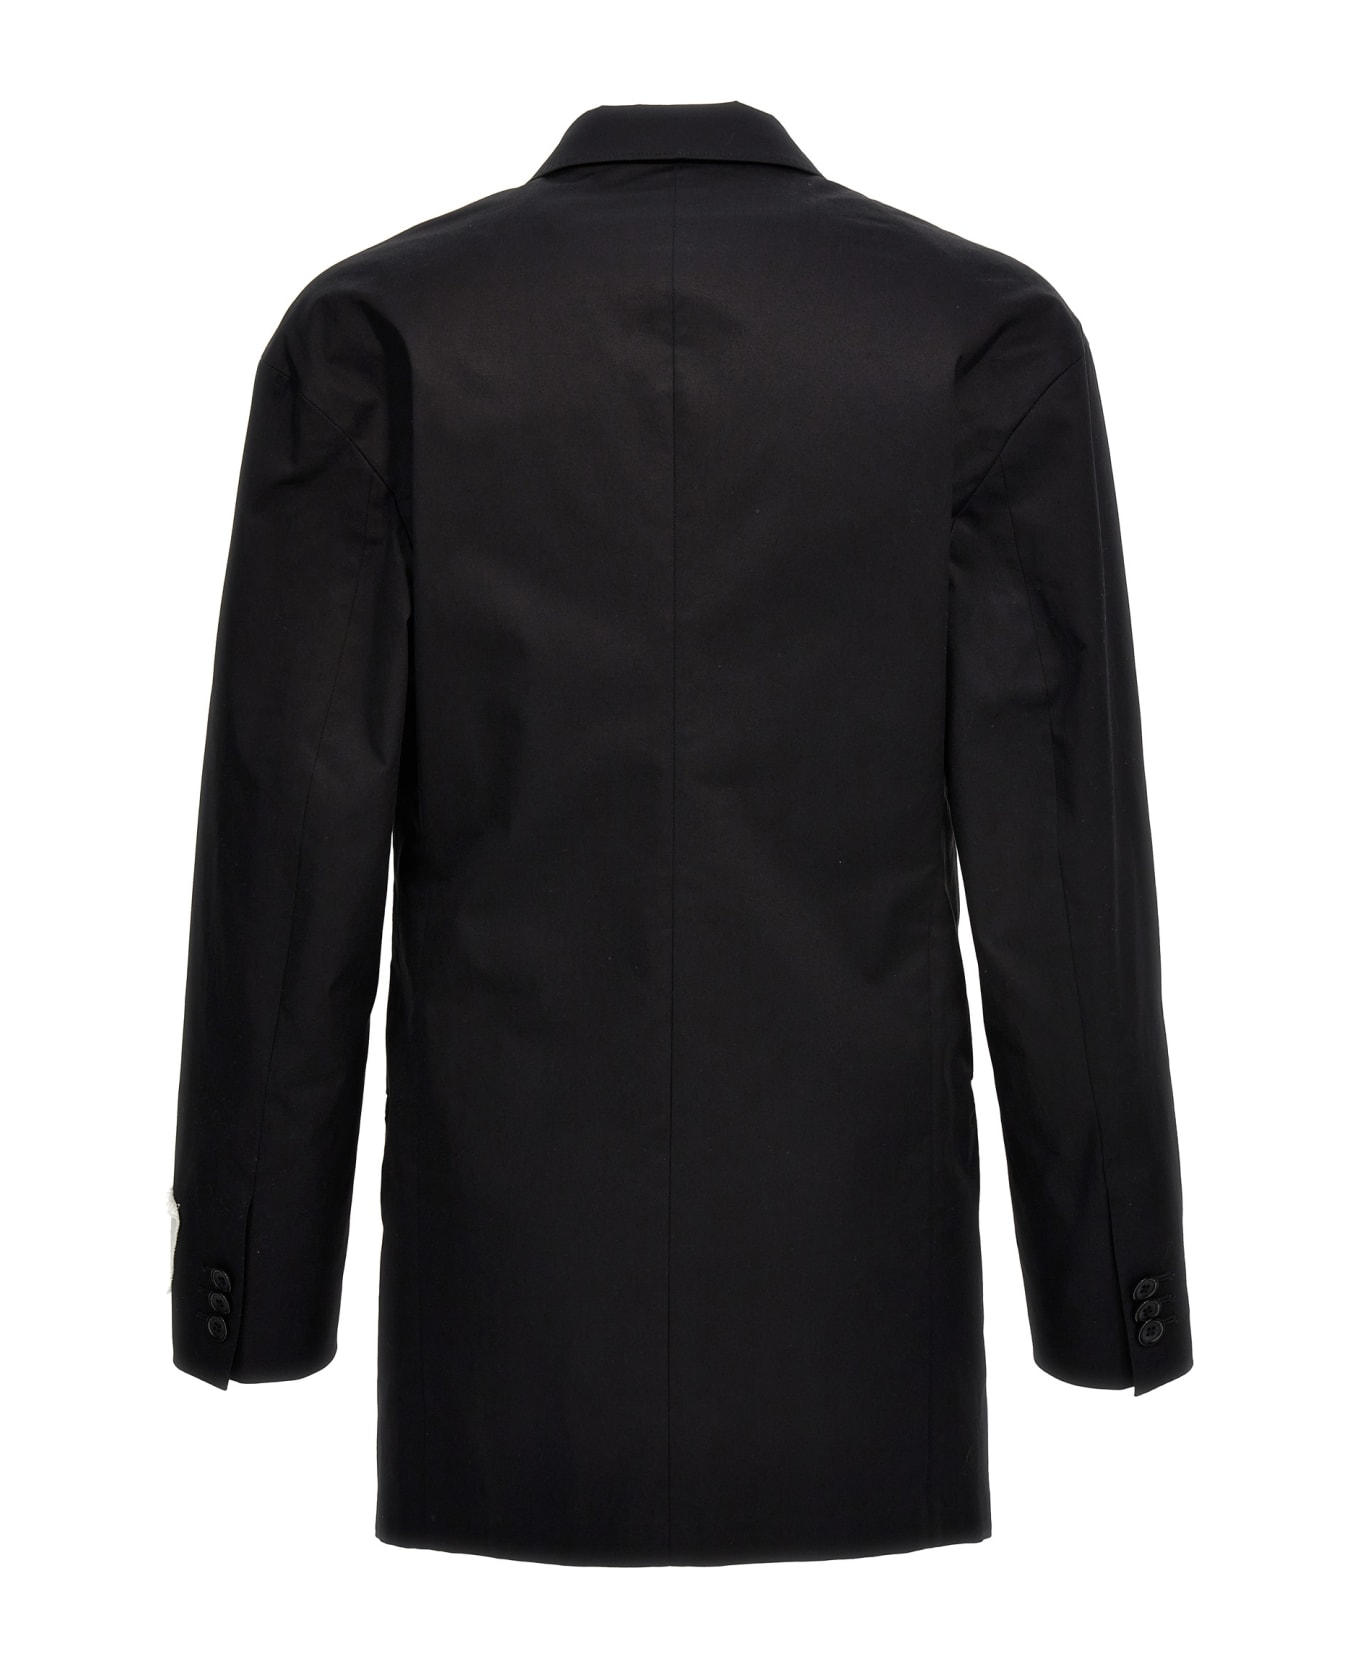 Dolce & Gabbana Blazer Jacket - black